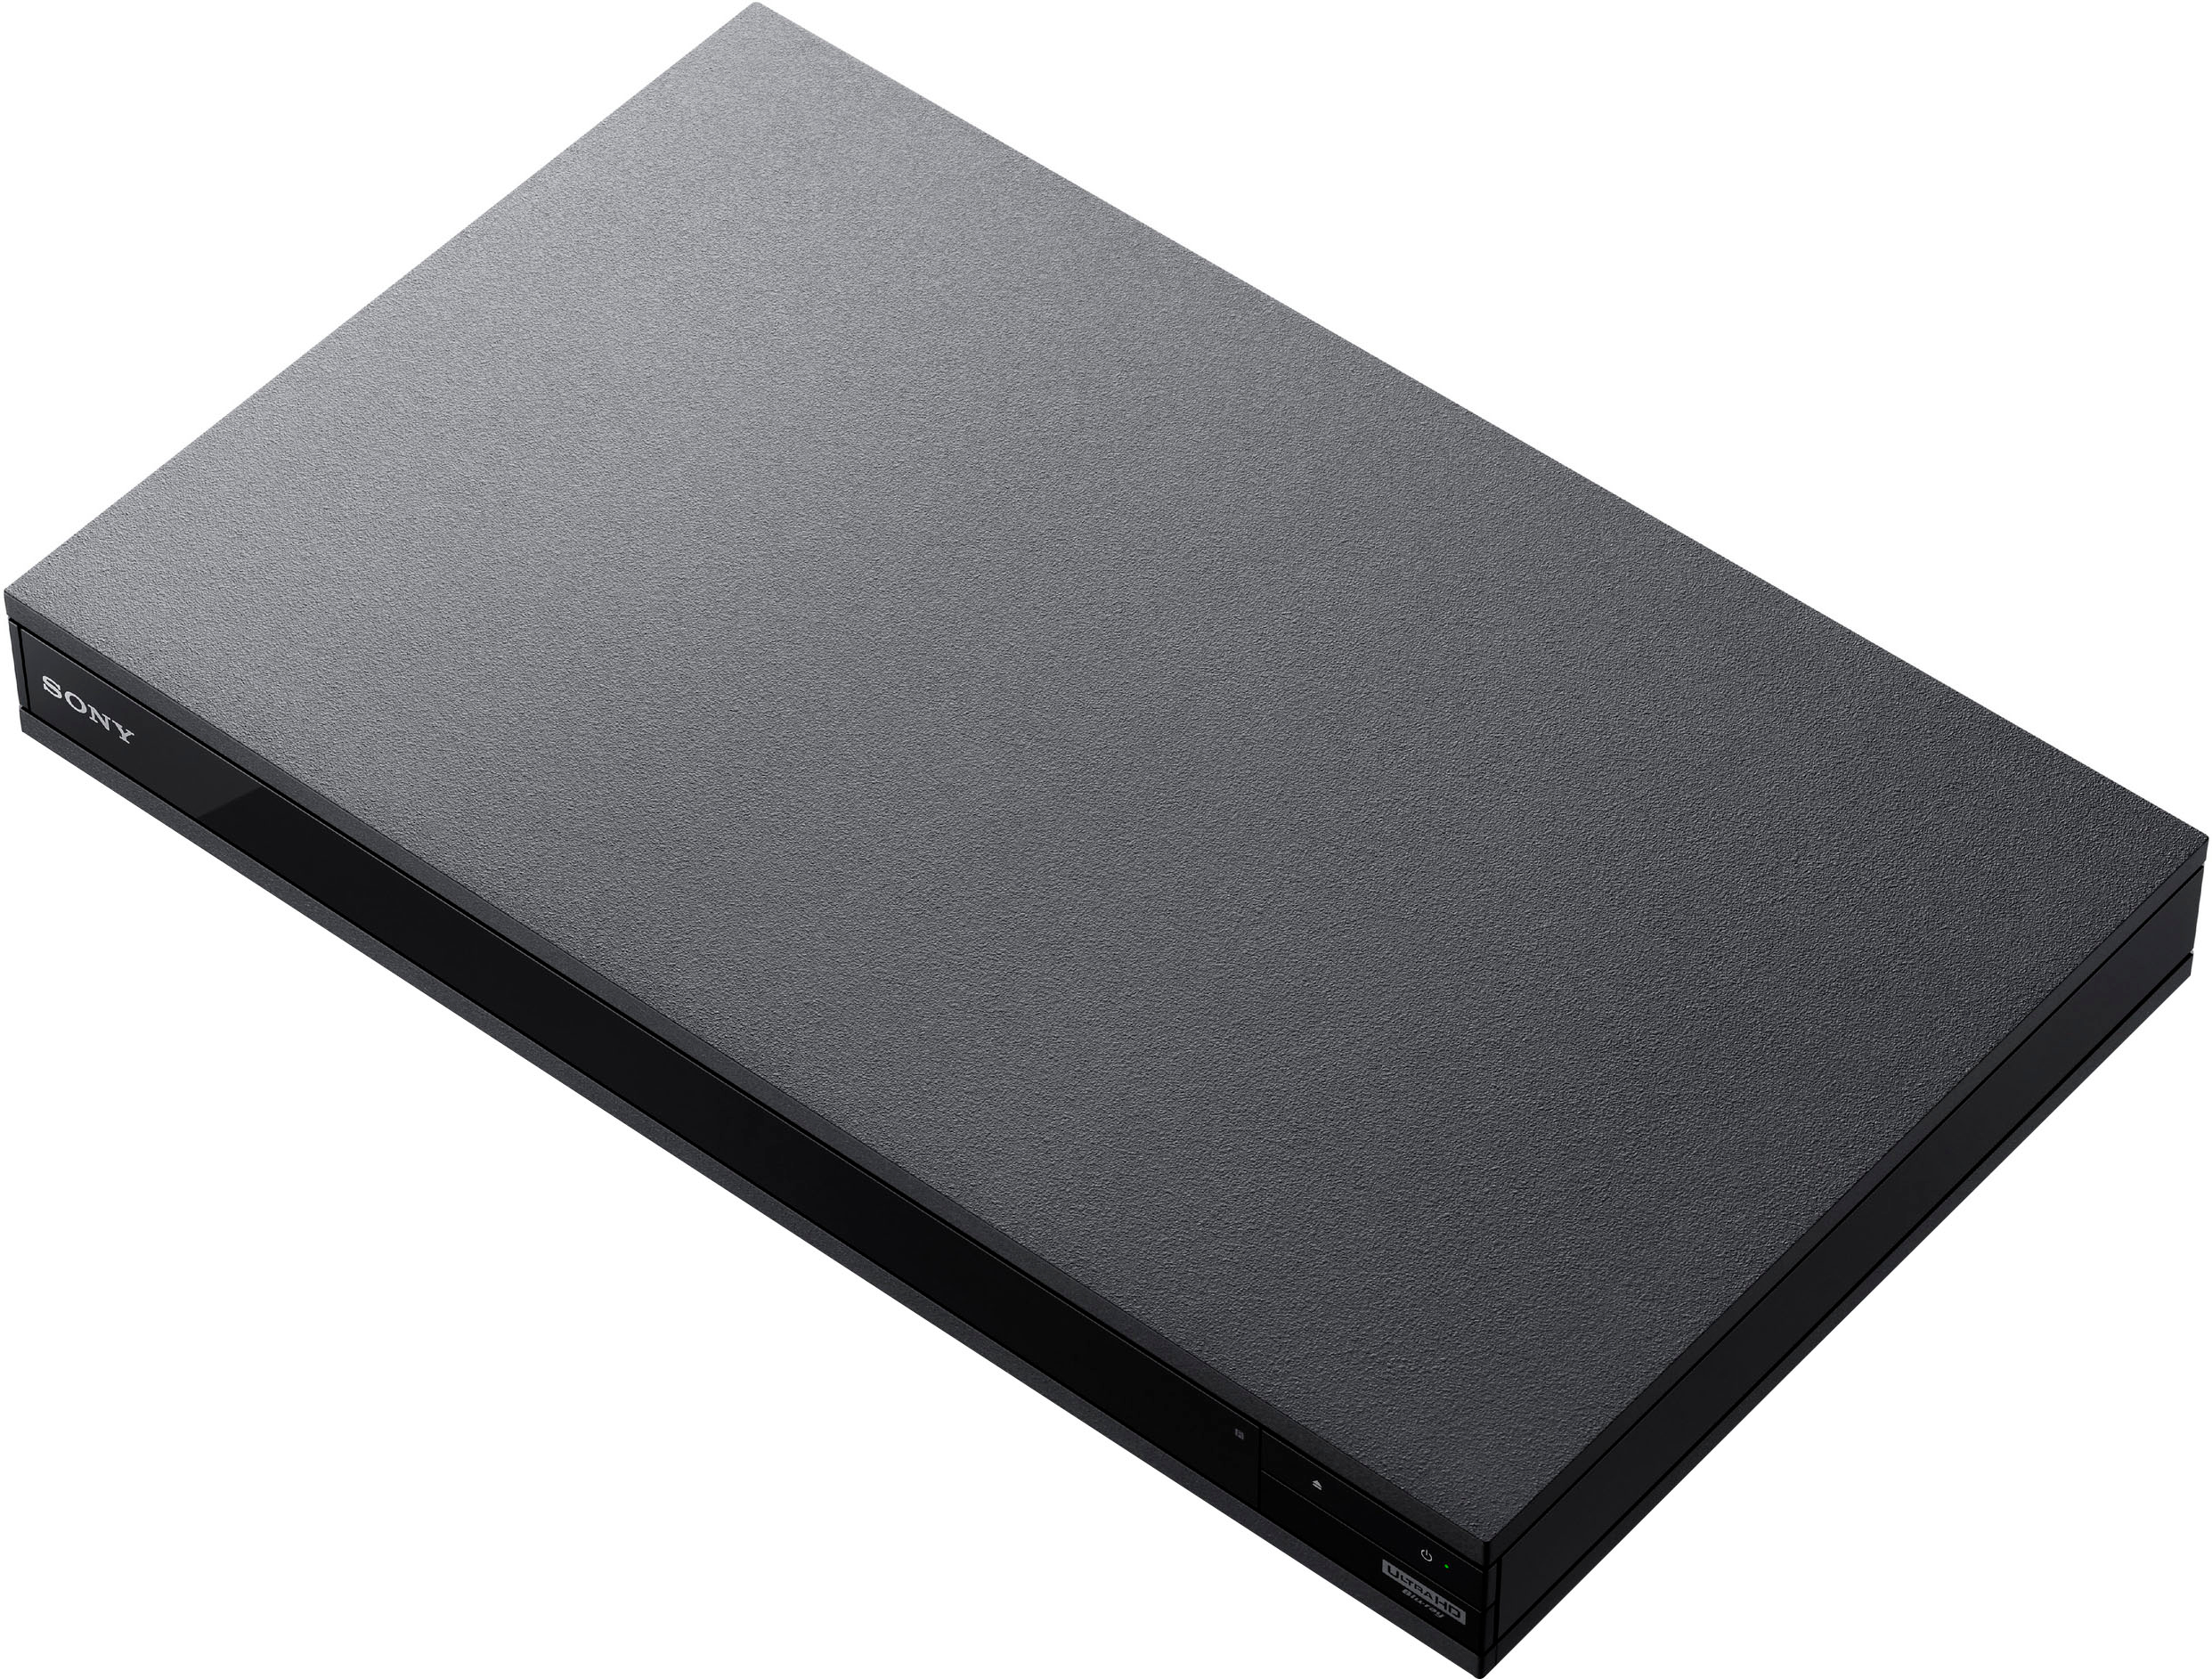 Sony UBP-X800M2 Streaming Black Wi-Fi Audio UBPX800M2 Blu-Ray Best Player Ultra Built-In Hi-Res Buy 4K - HD